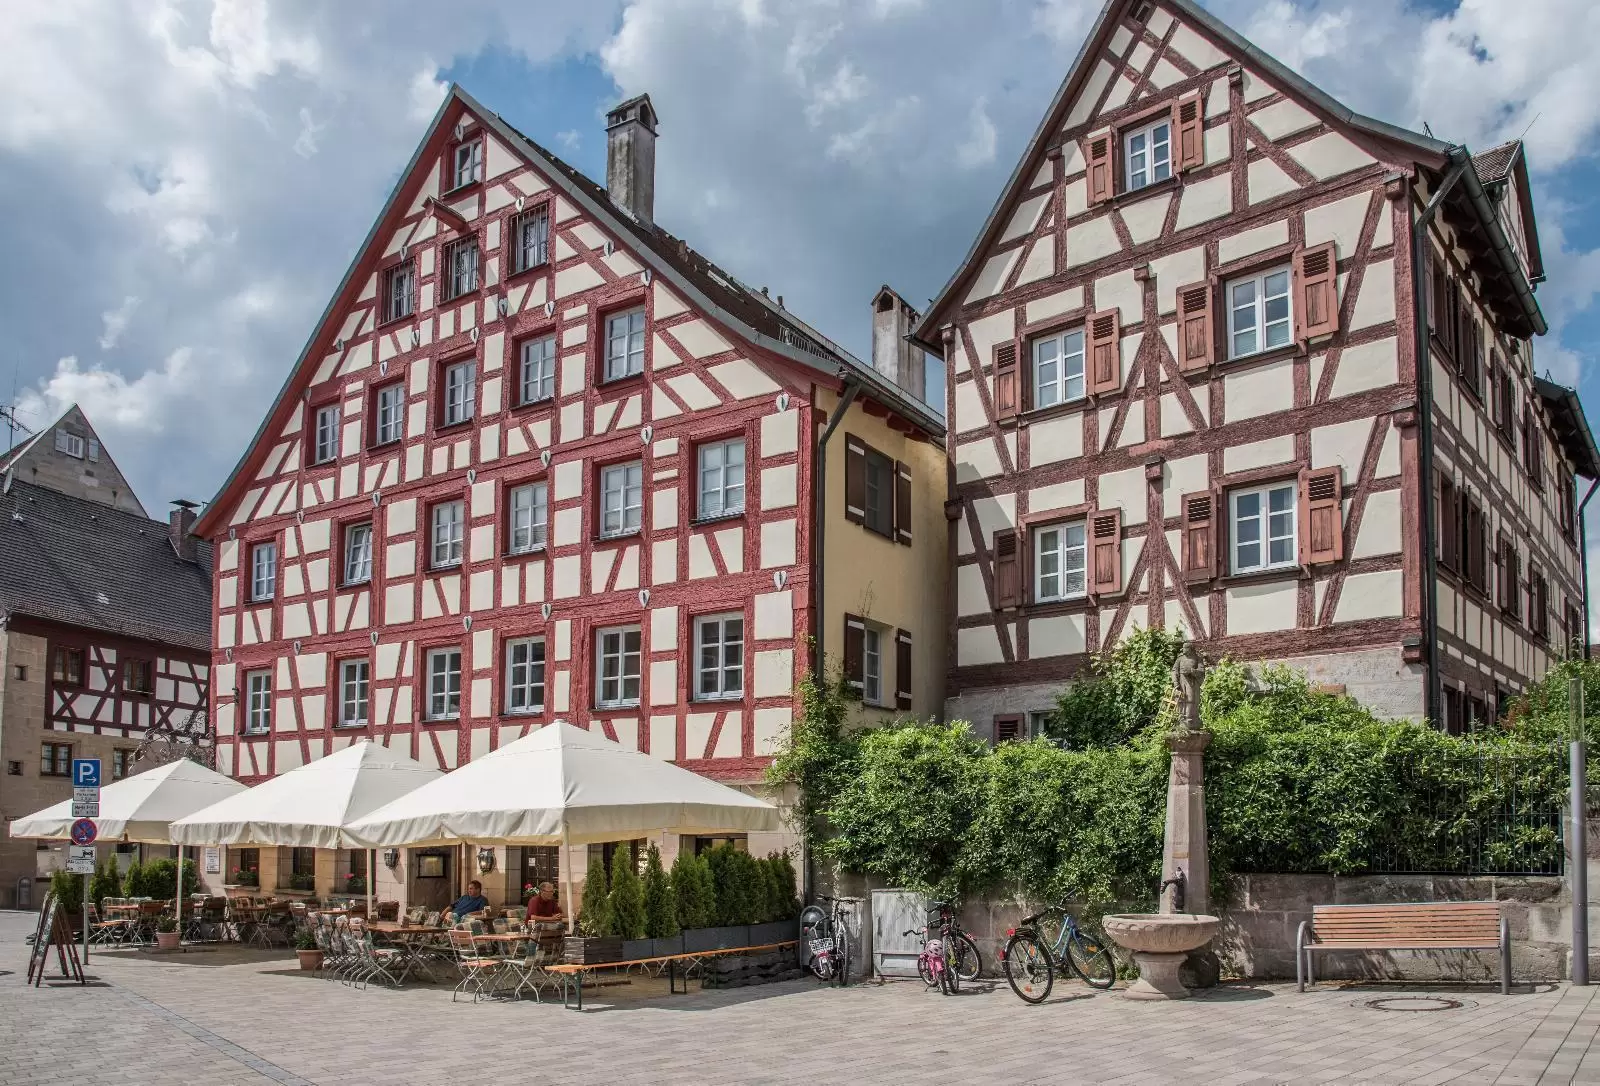 Altdorf Old Town